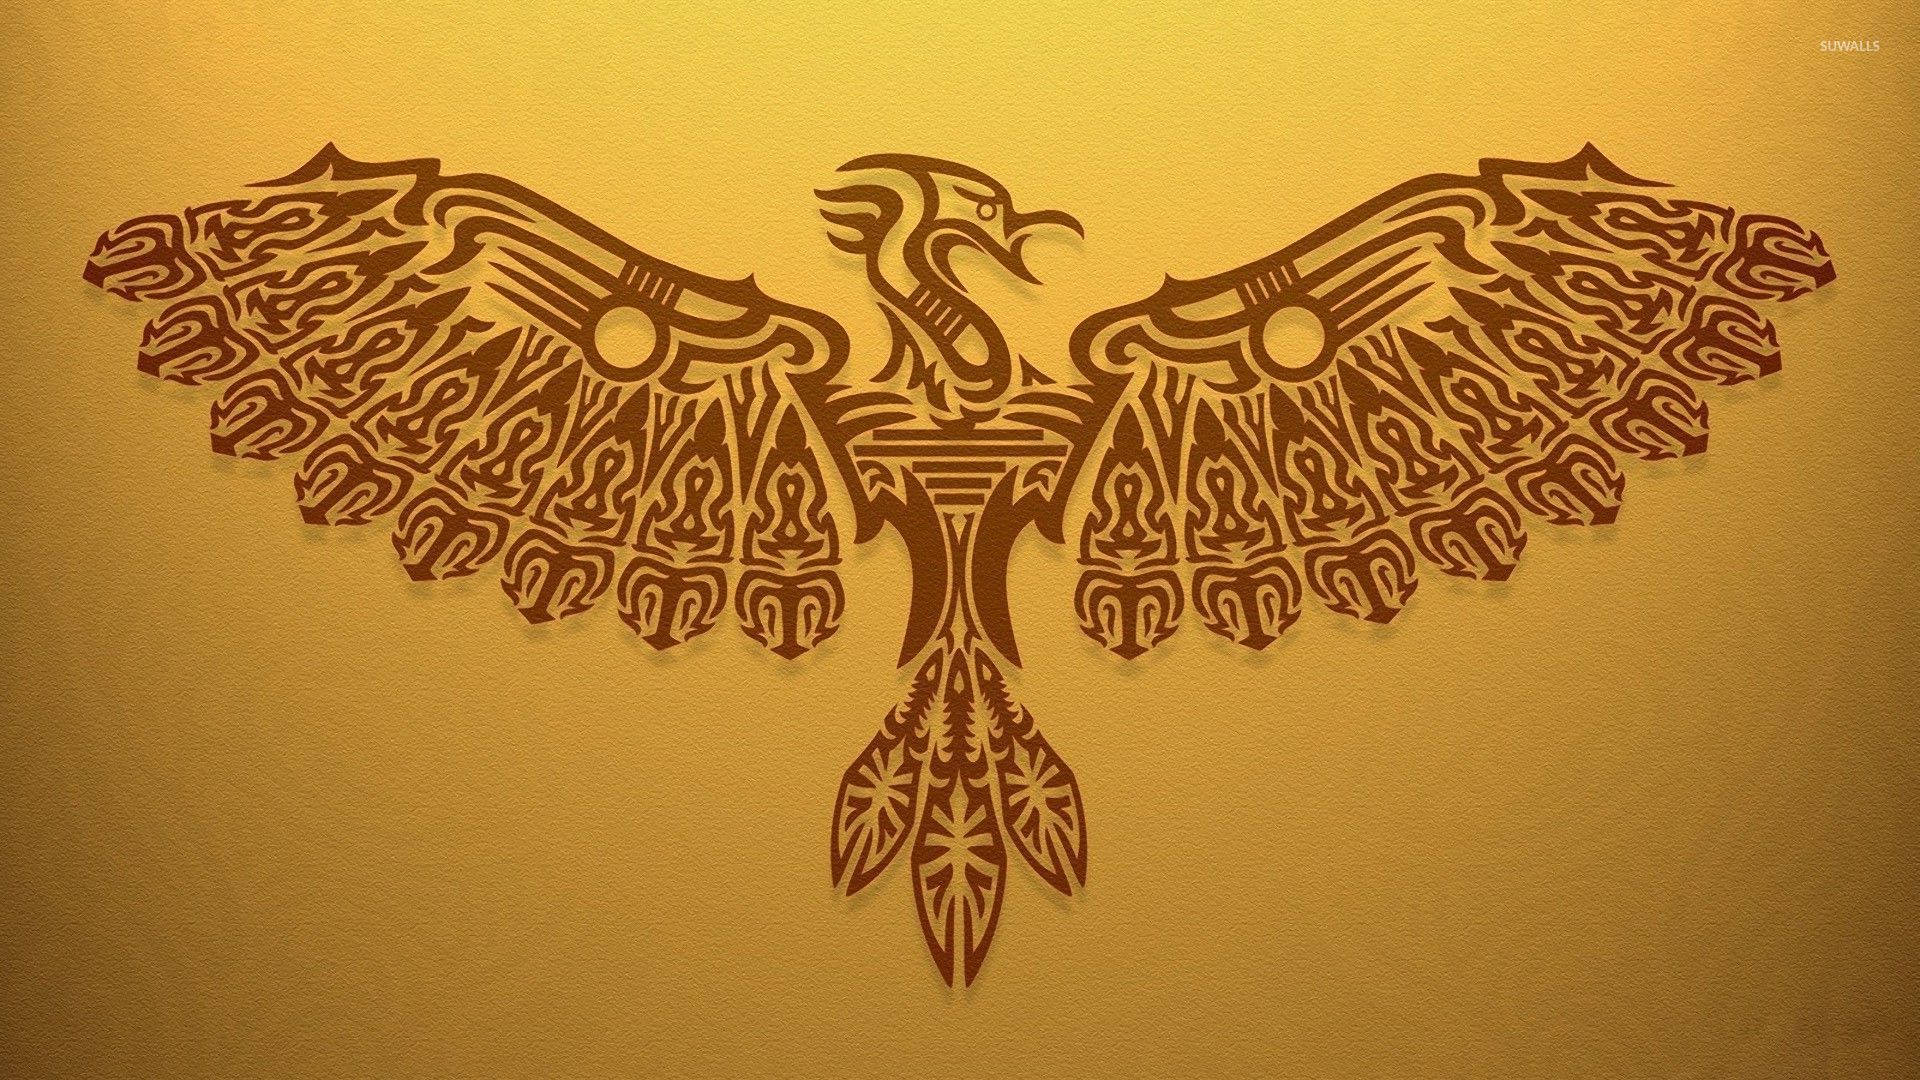 The Legendary Phoenix Rises Wallpaper